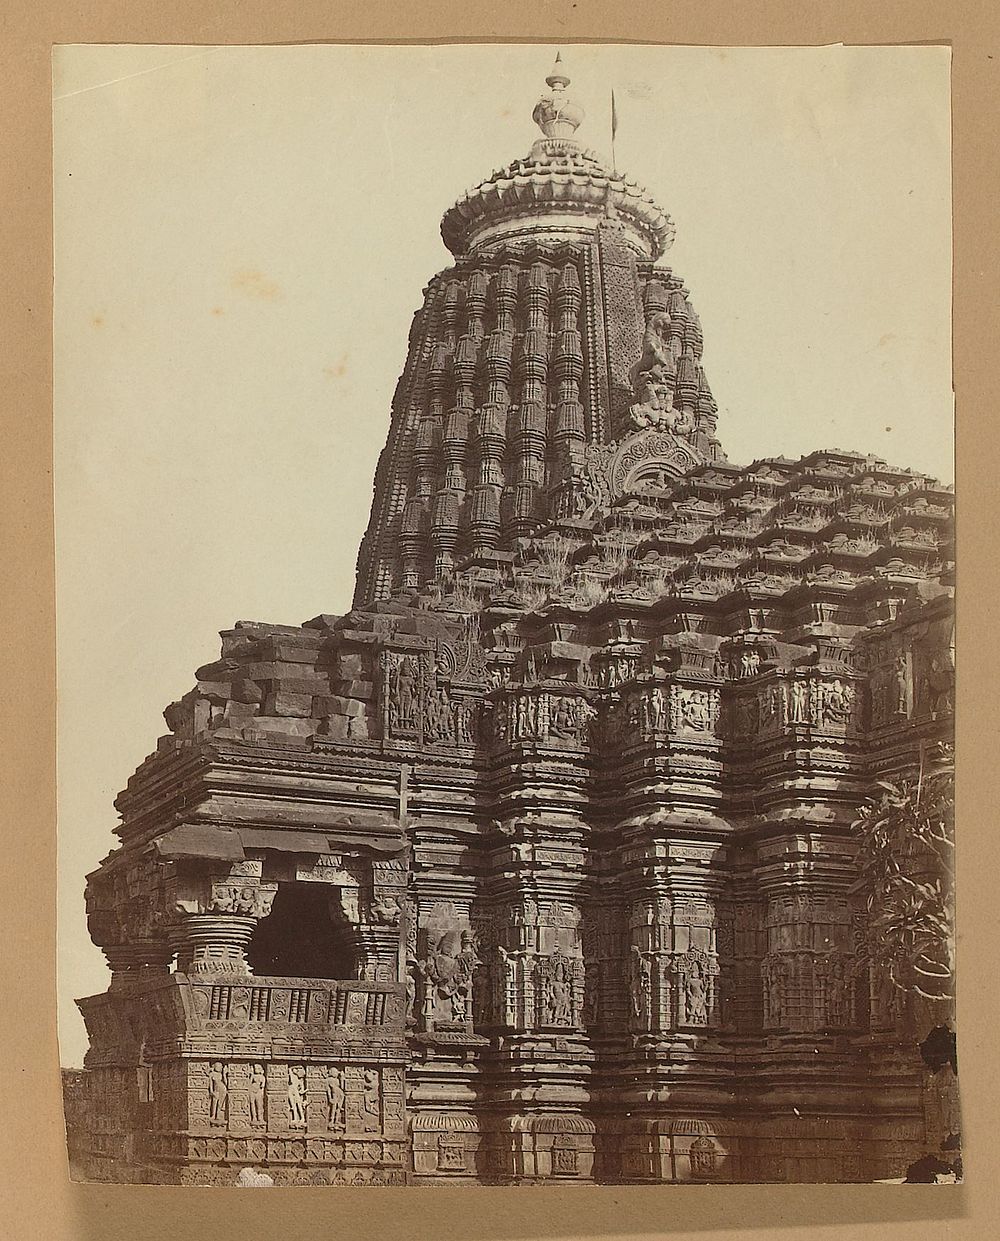 India (c. 1860 - c. 1865) by James John Waterhouse